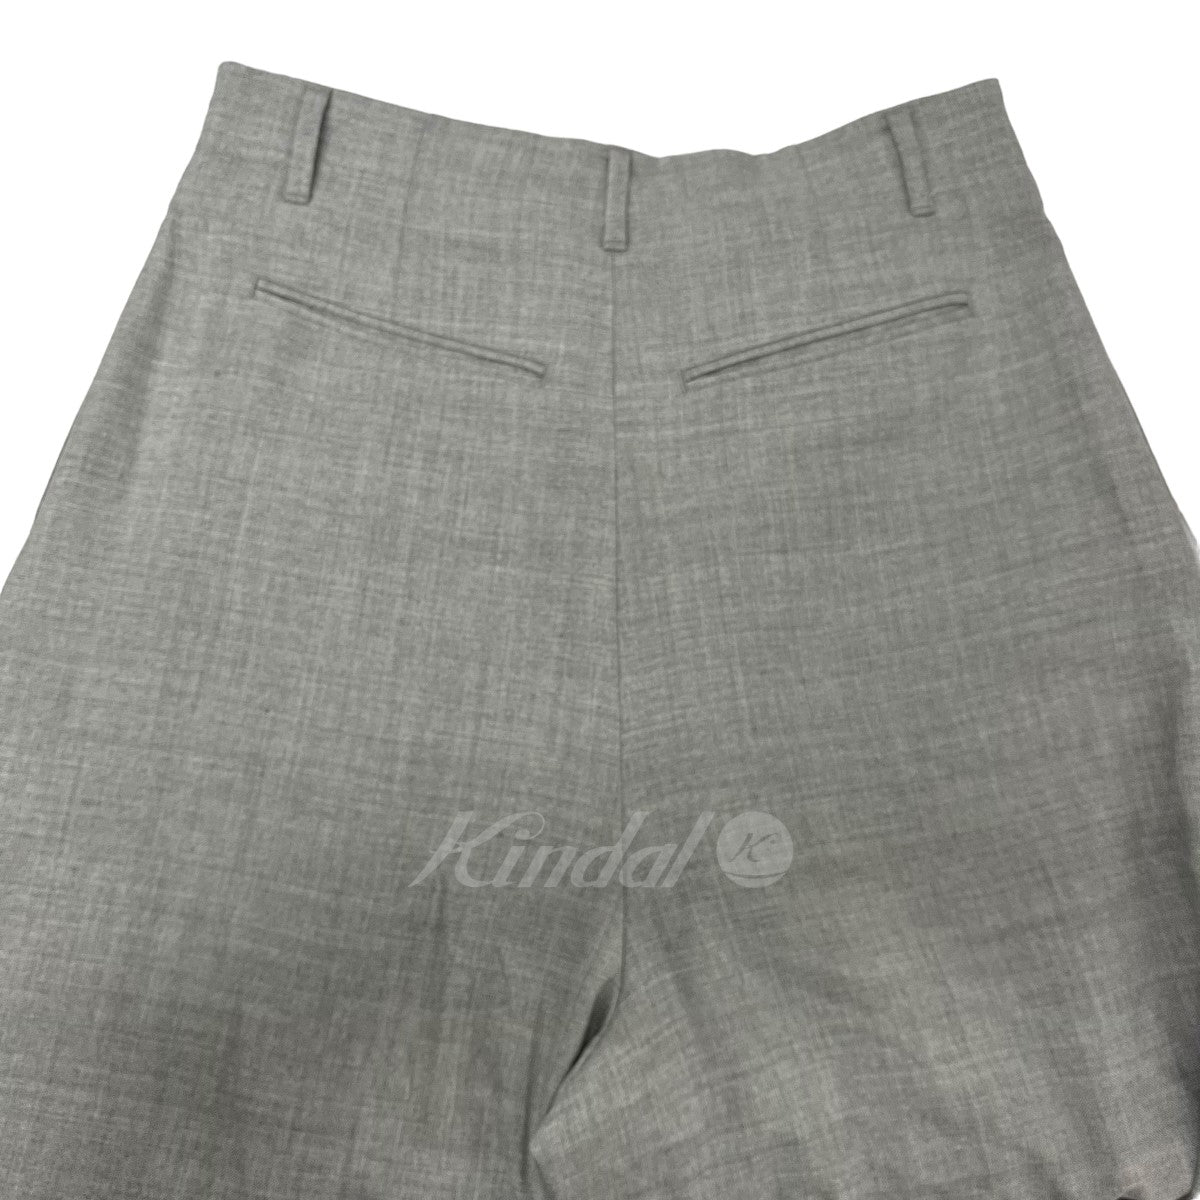 SOSHIOTSUKI(ソウシオオツキ) 「Kimono Breasted FieldI Cargo Trousers」キモノカーゴパンツ